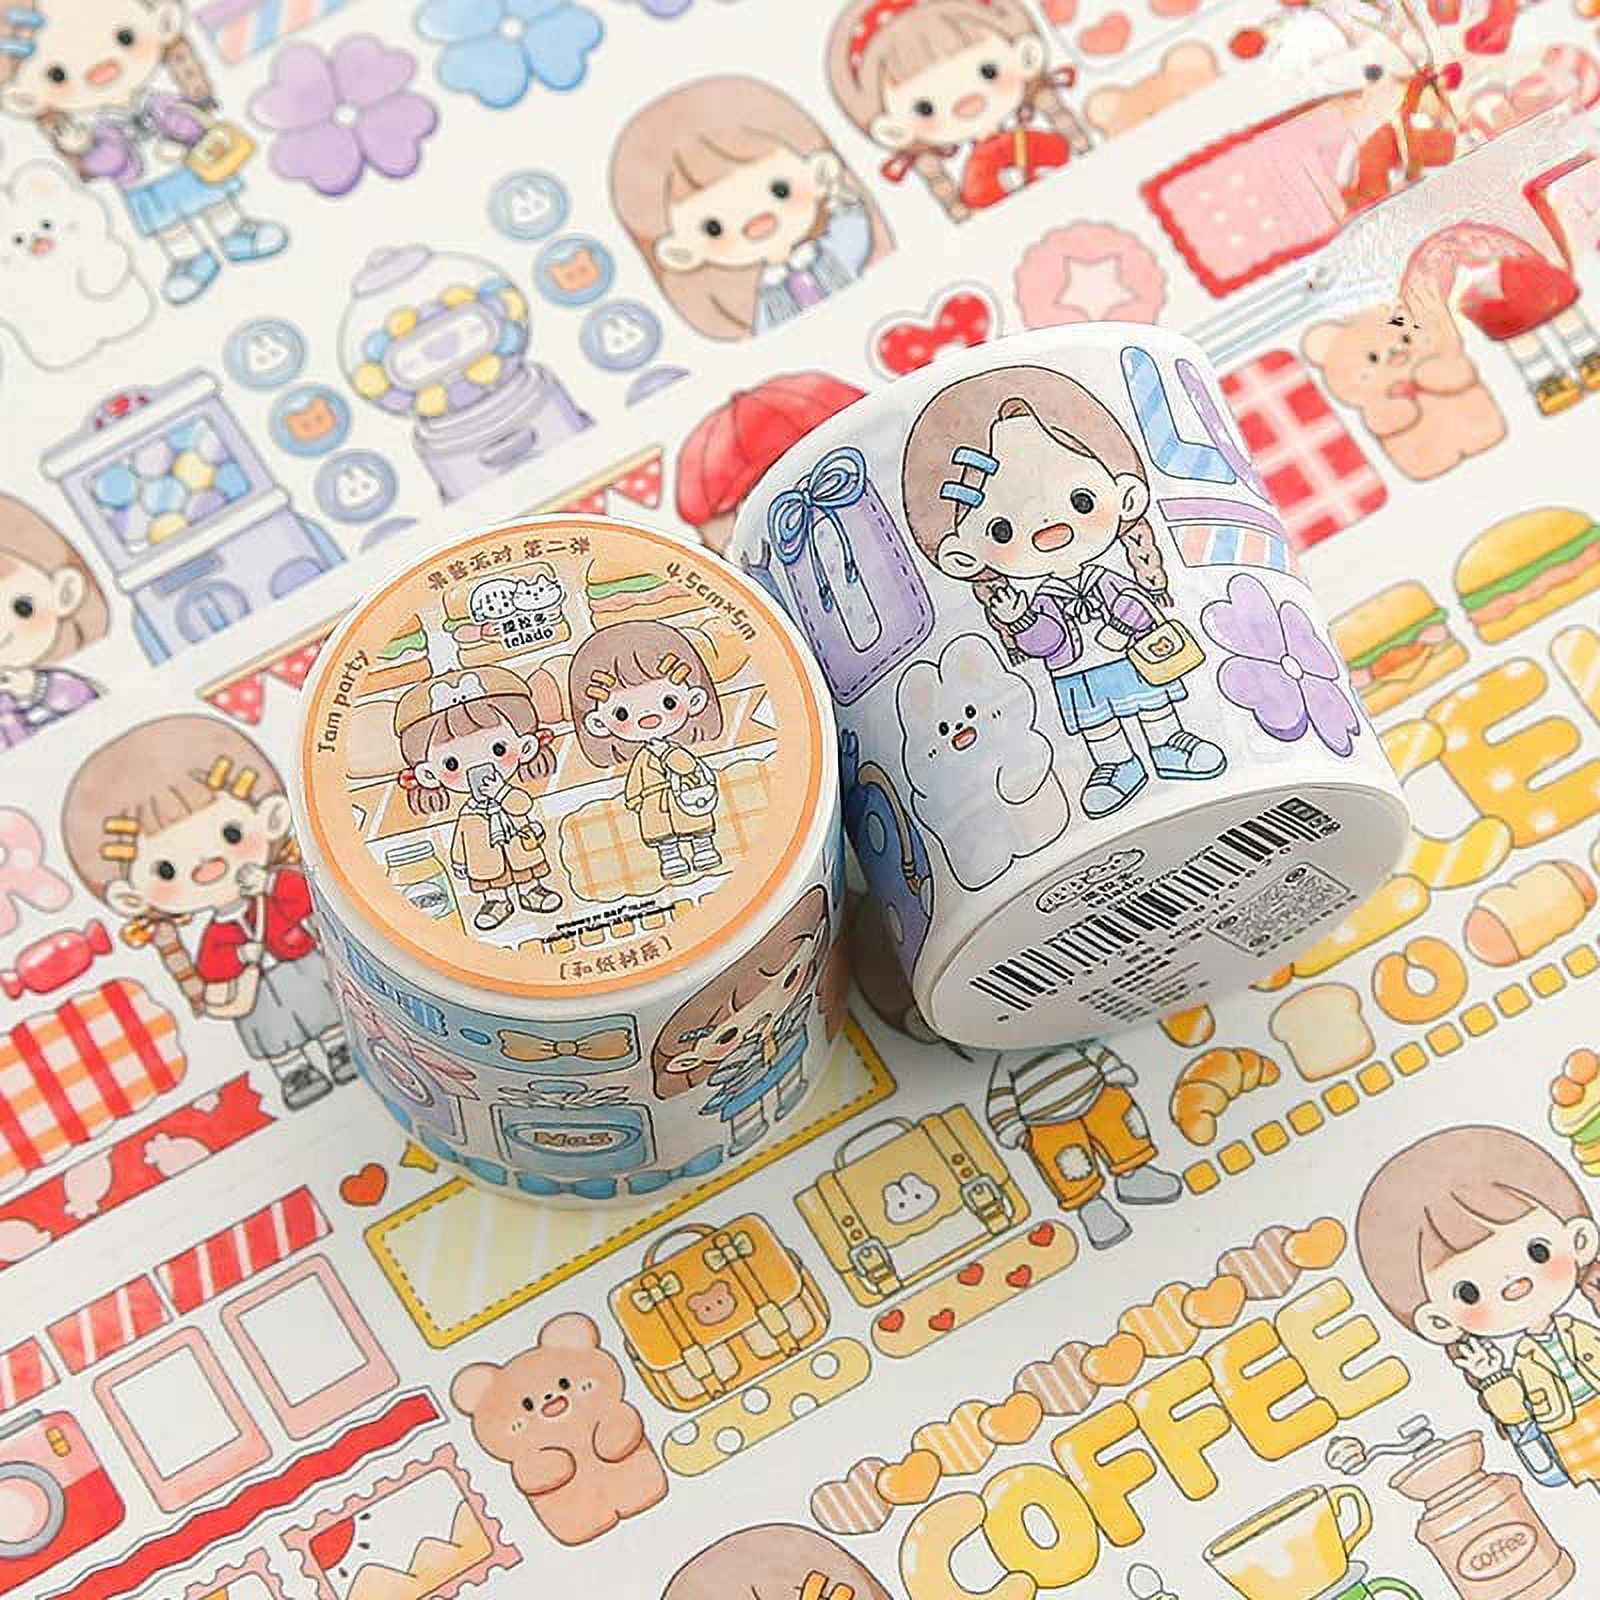 Danceemangoos Kawaii Washi Tape Set - 4 Rolls Cute Washi Paper Masking Tape and 4pcs Stickers Set, DIY Decorative Stickers for Journaling, Yellow